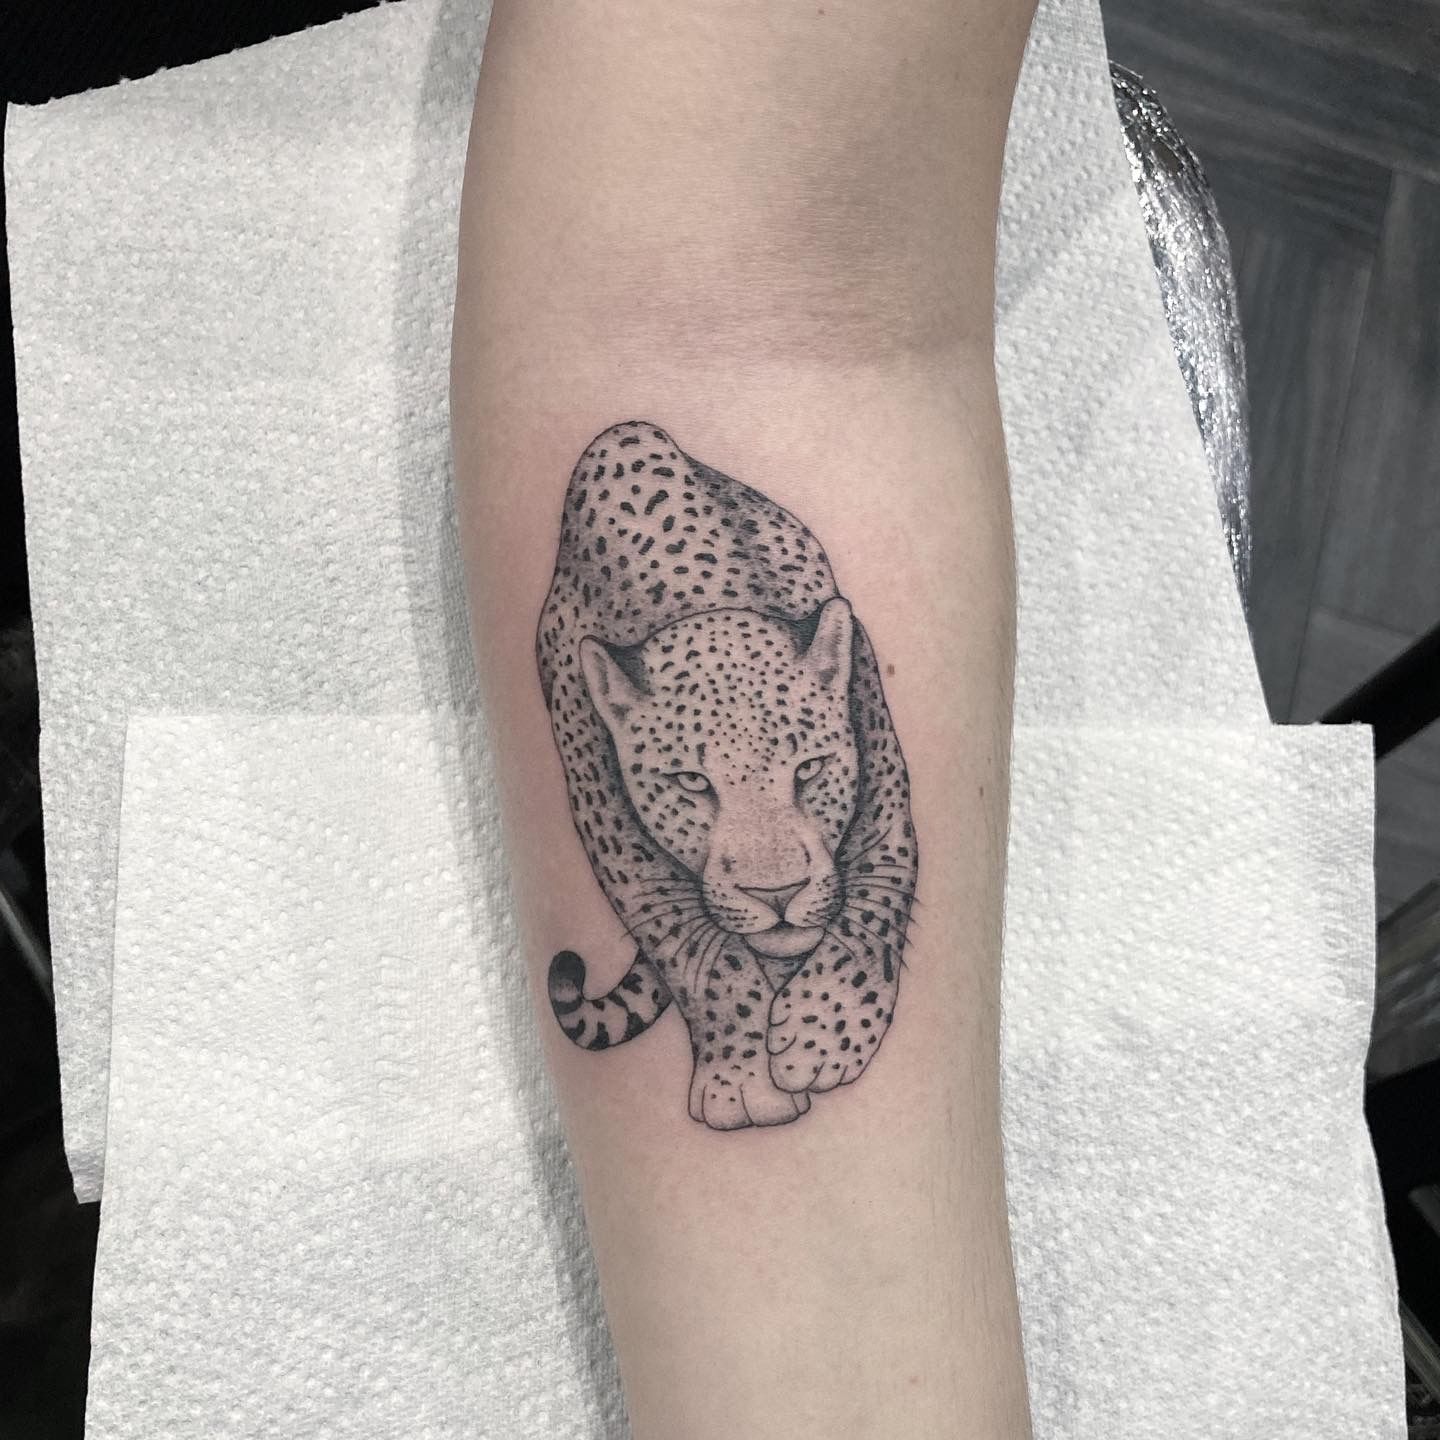 Jaguar tattoo by AtomiccircuS on DeviantArt